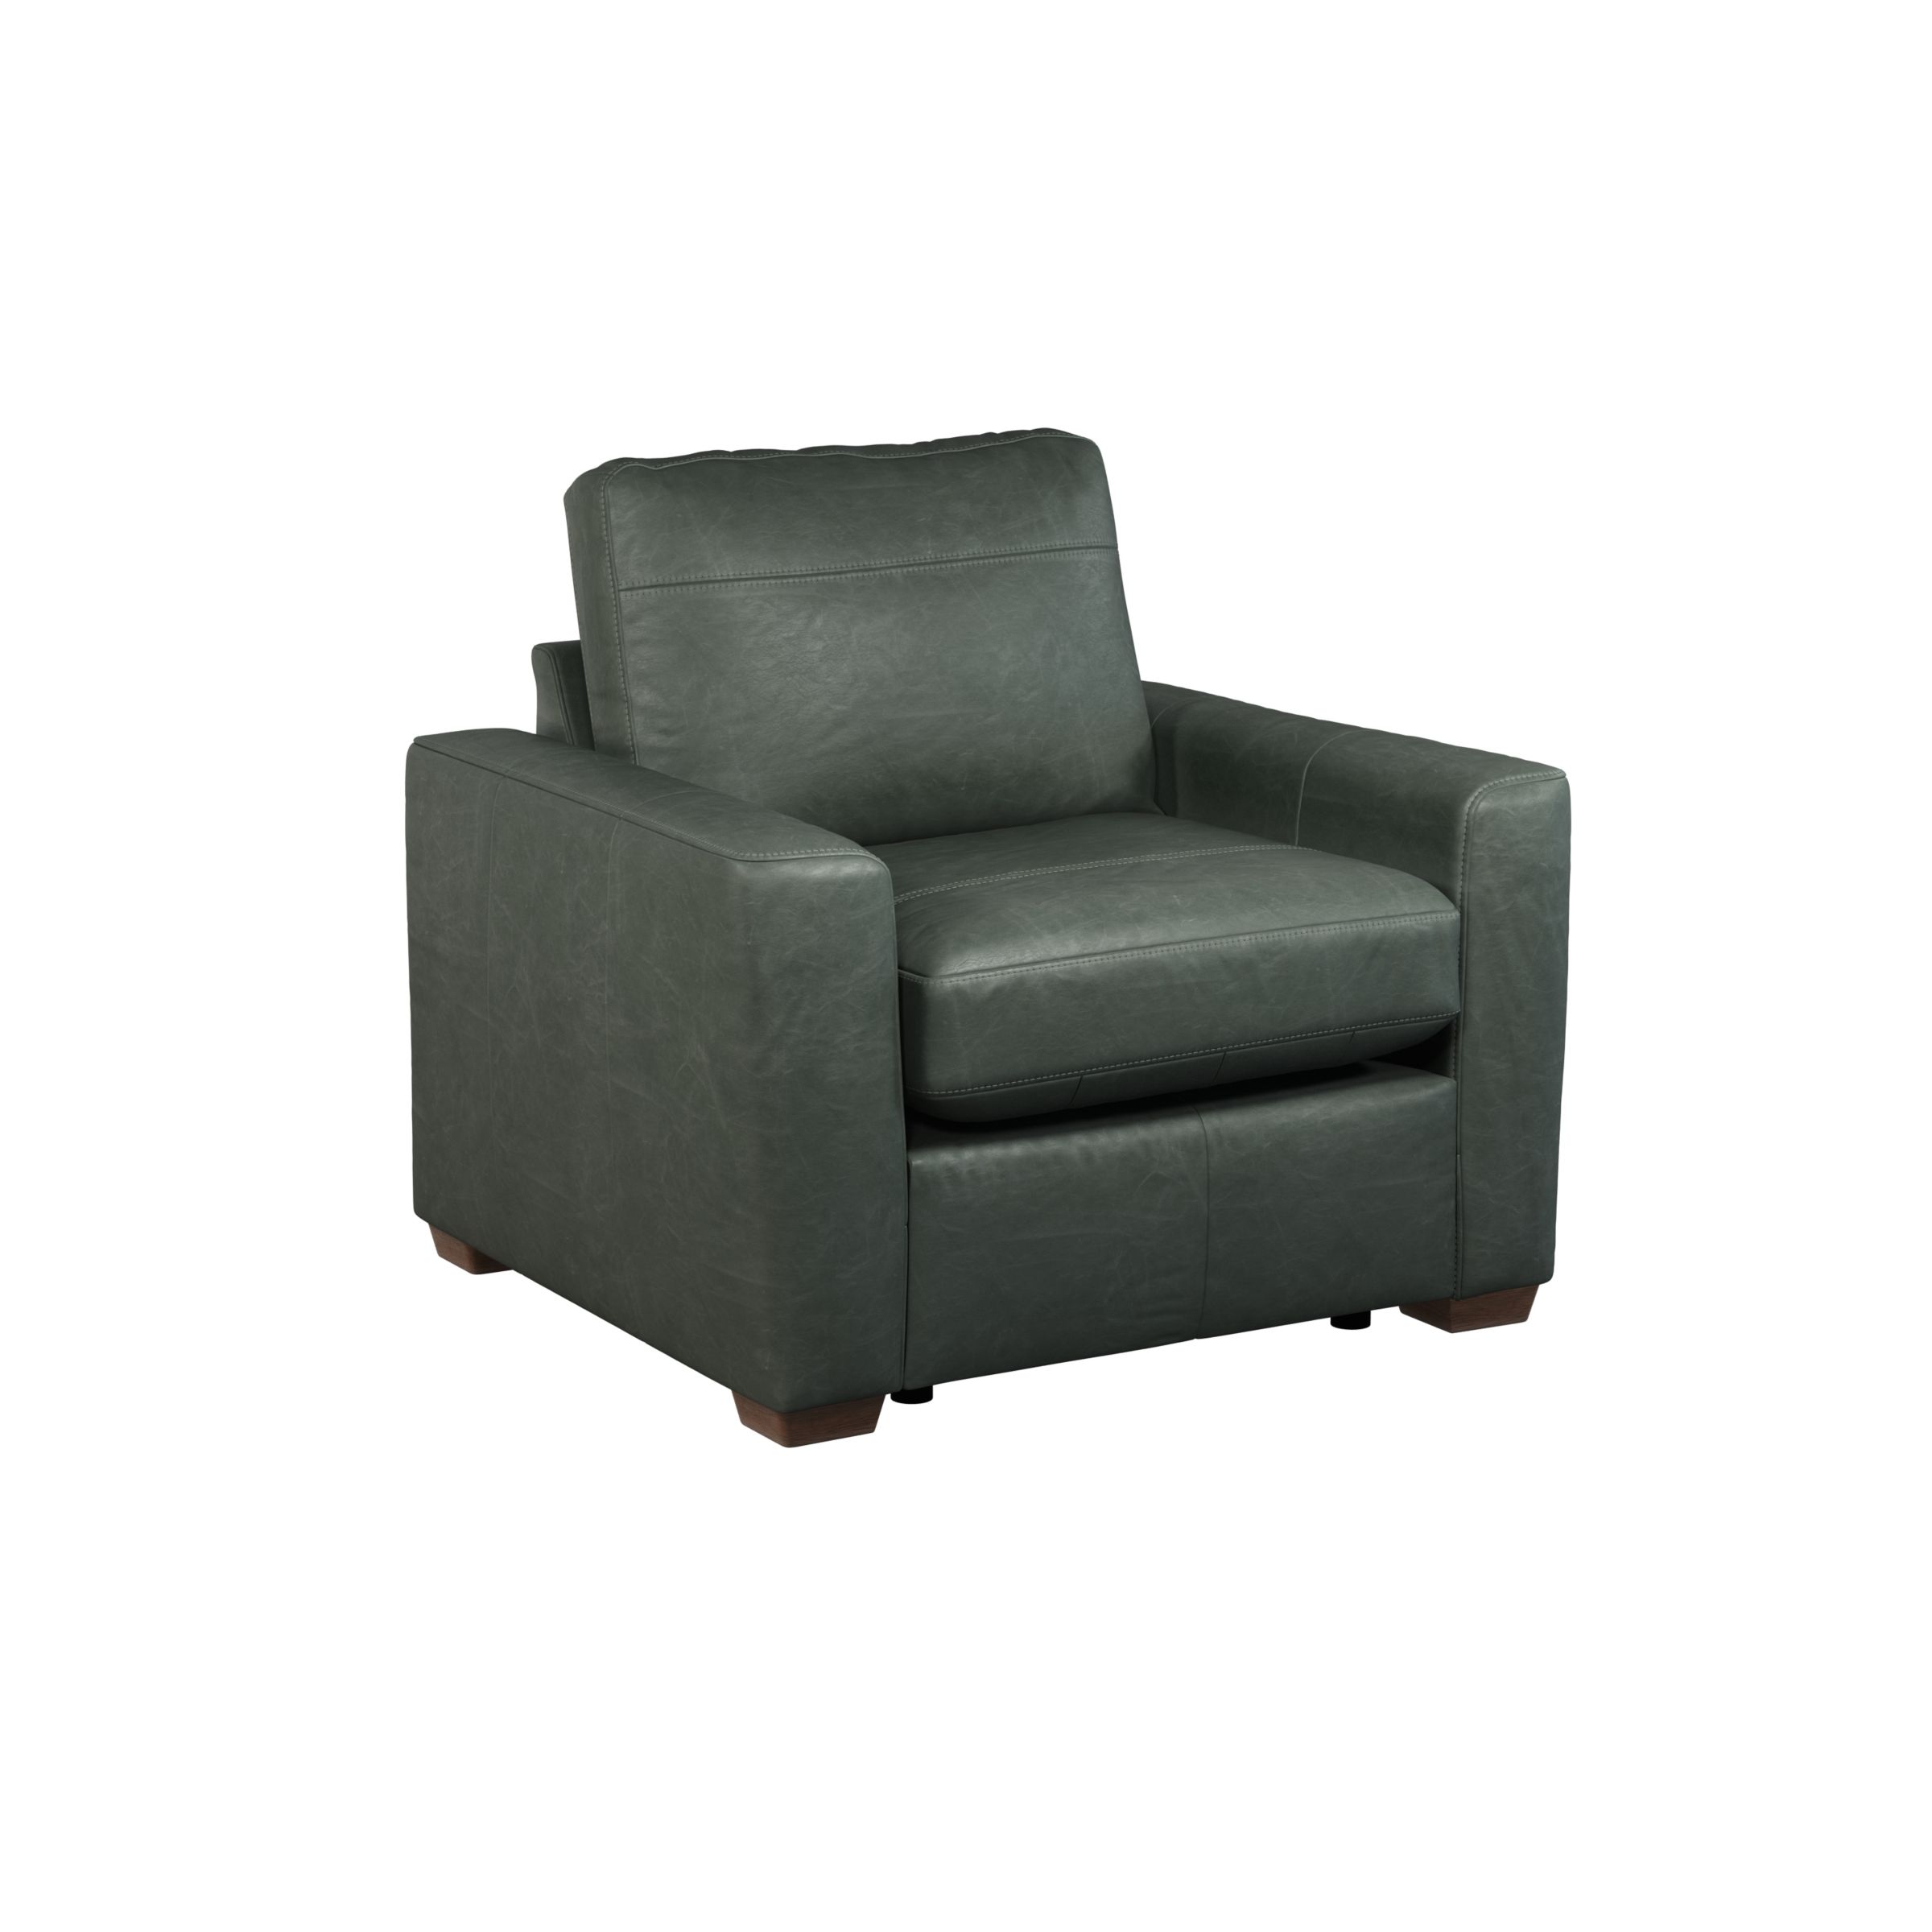 John Lewis Oliver Leather Armchair, Dark Leg